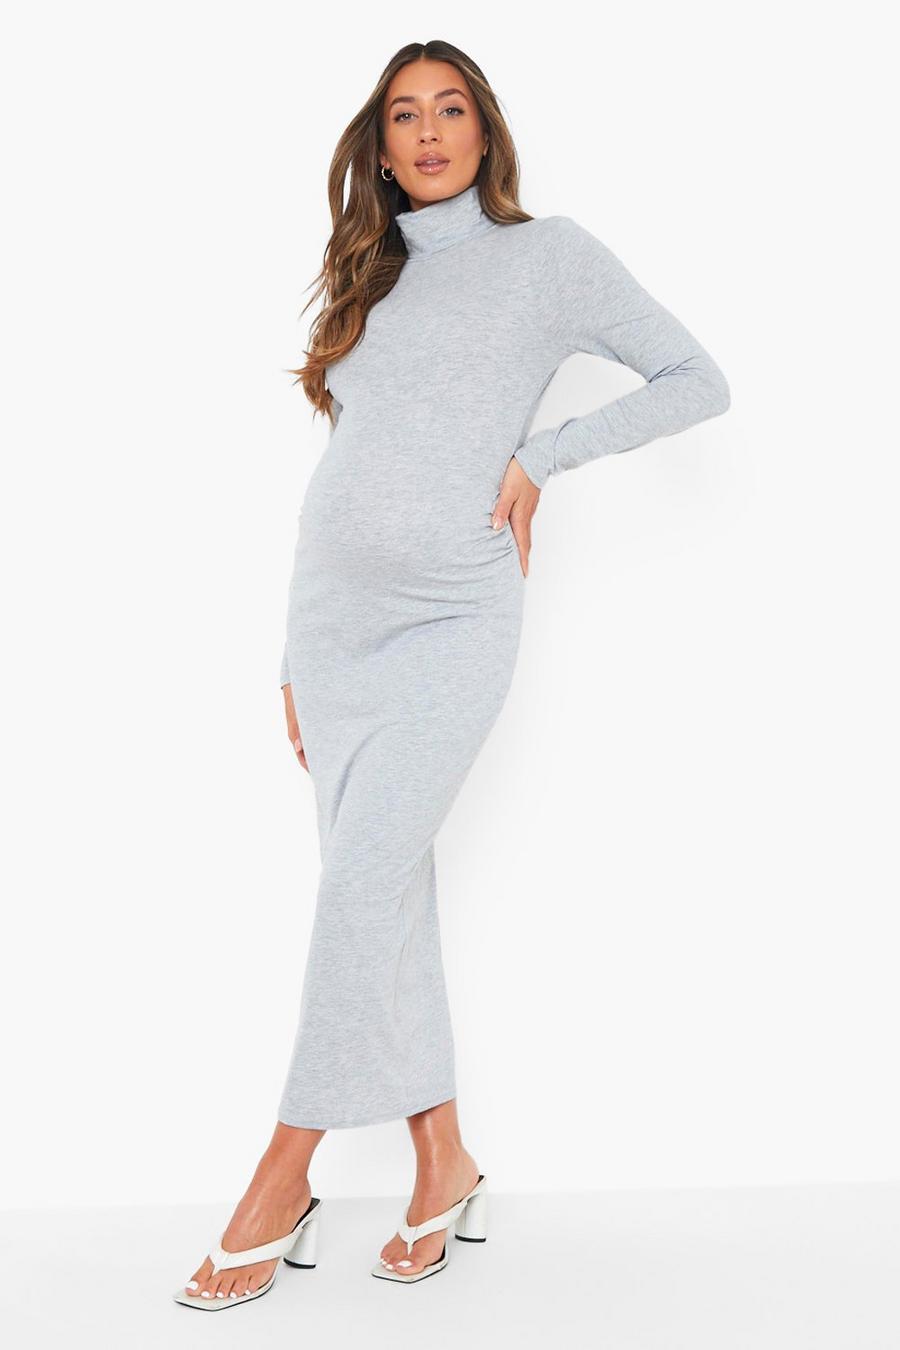 Grey marl Maternity Roll Neck Midaxi Dress